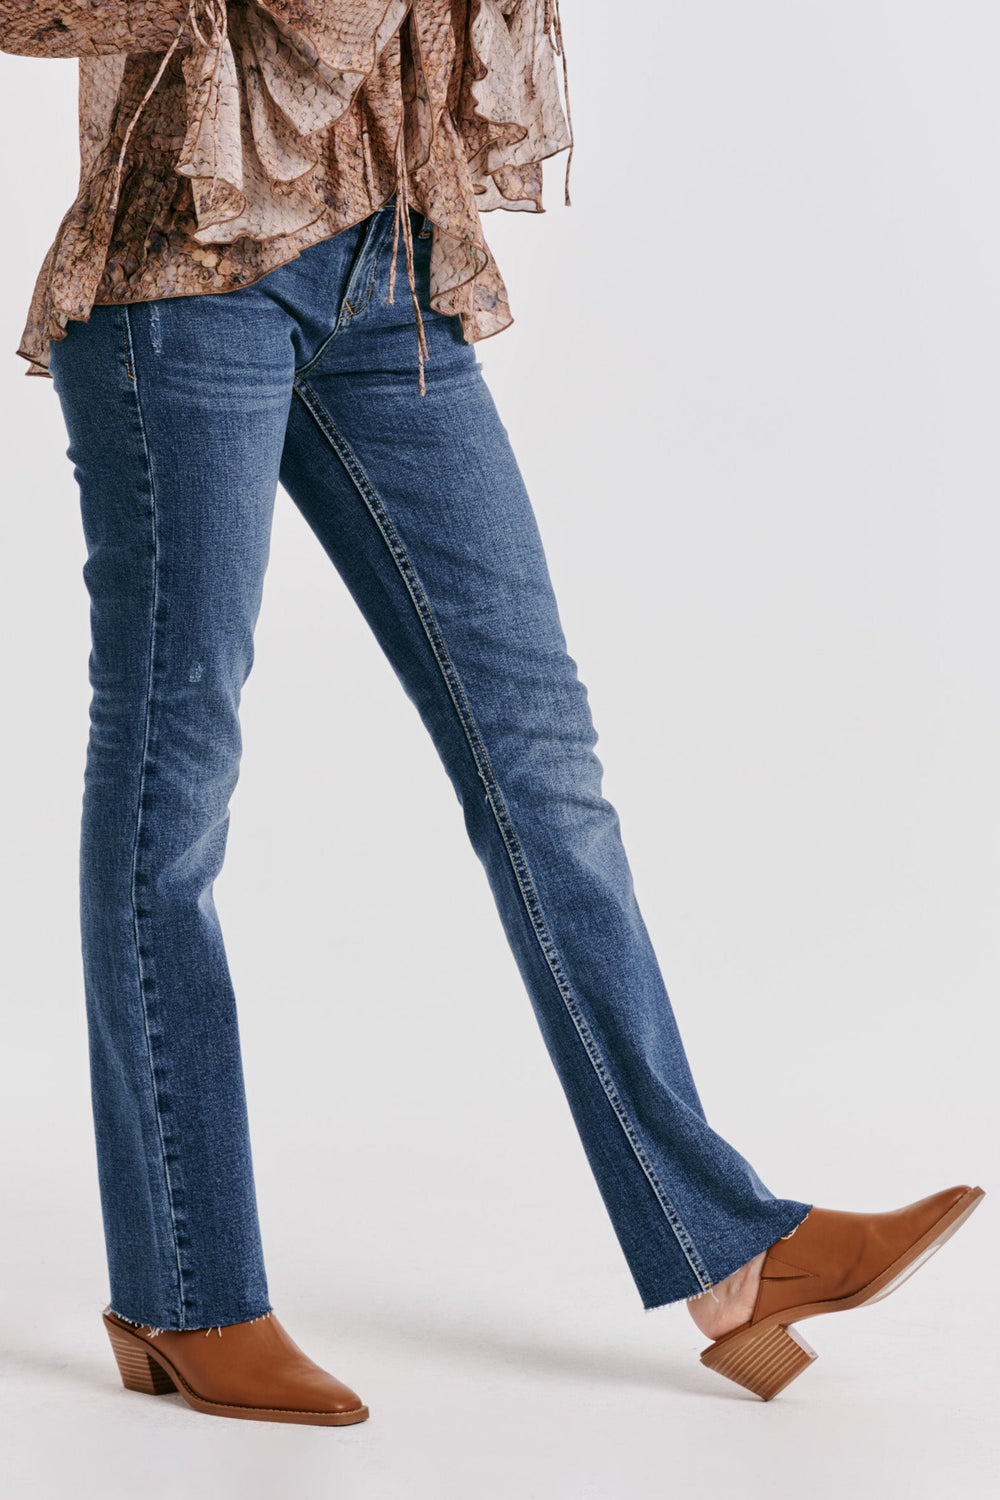 blaire-high-rise-slim-straight-jeans-lillie